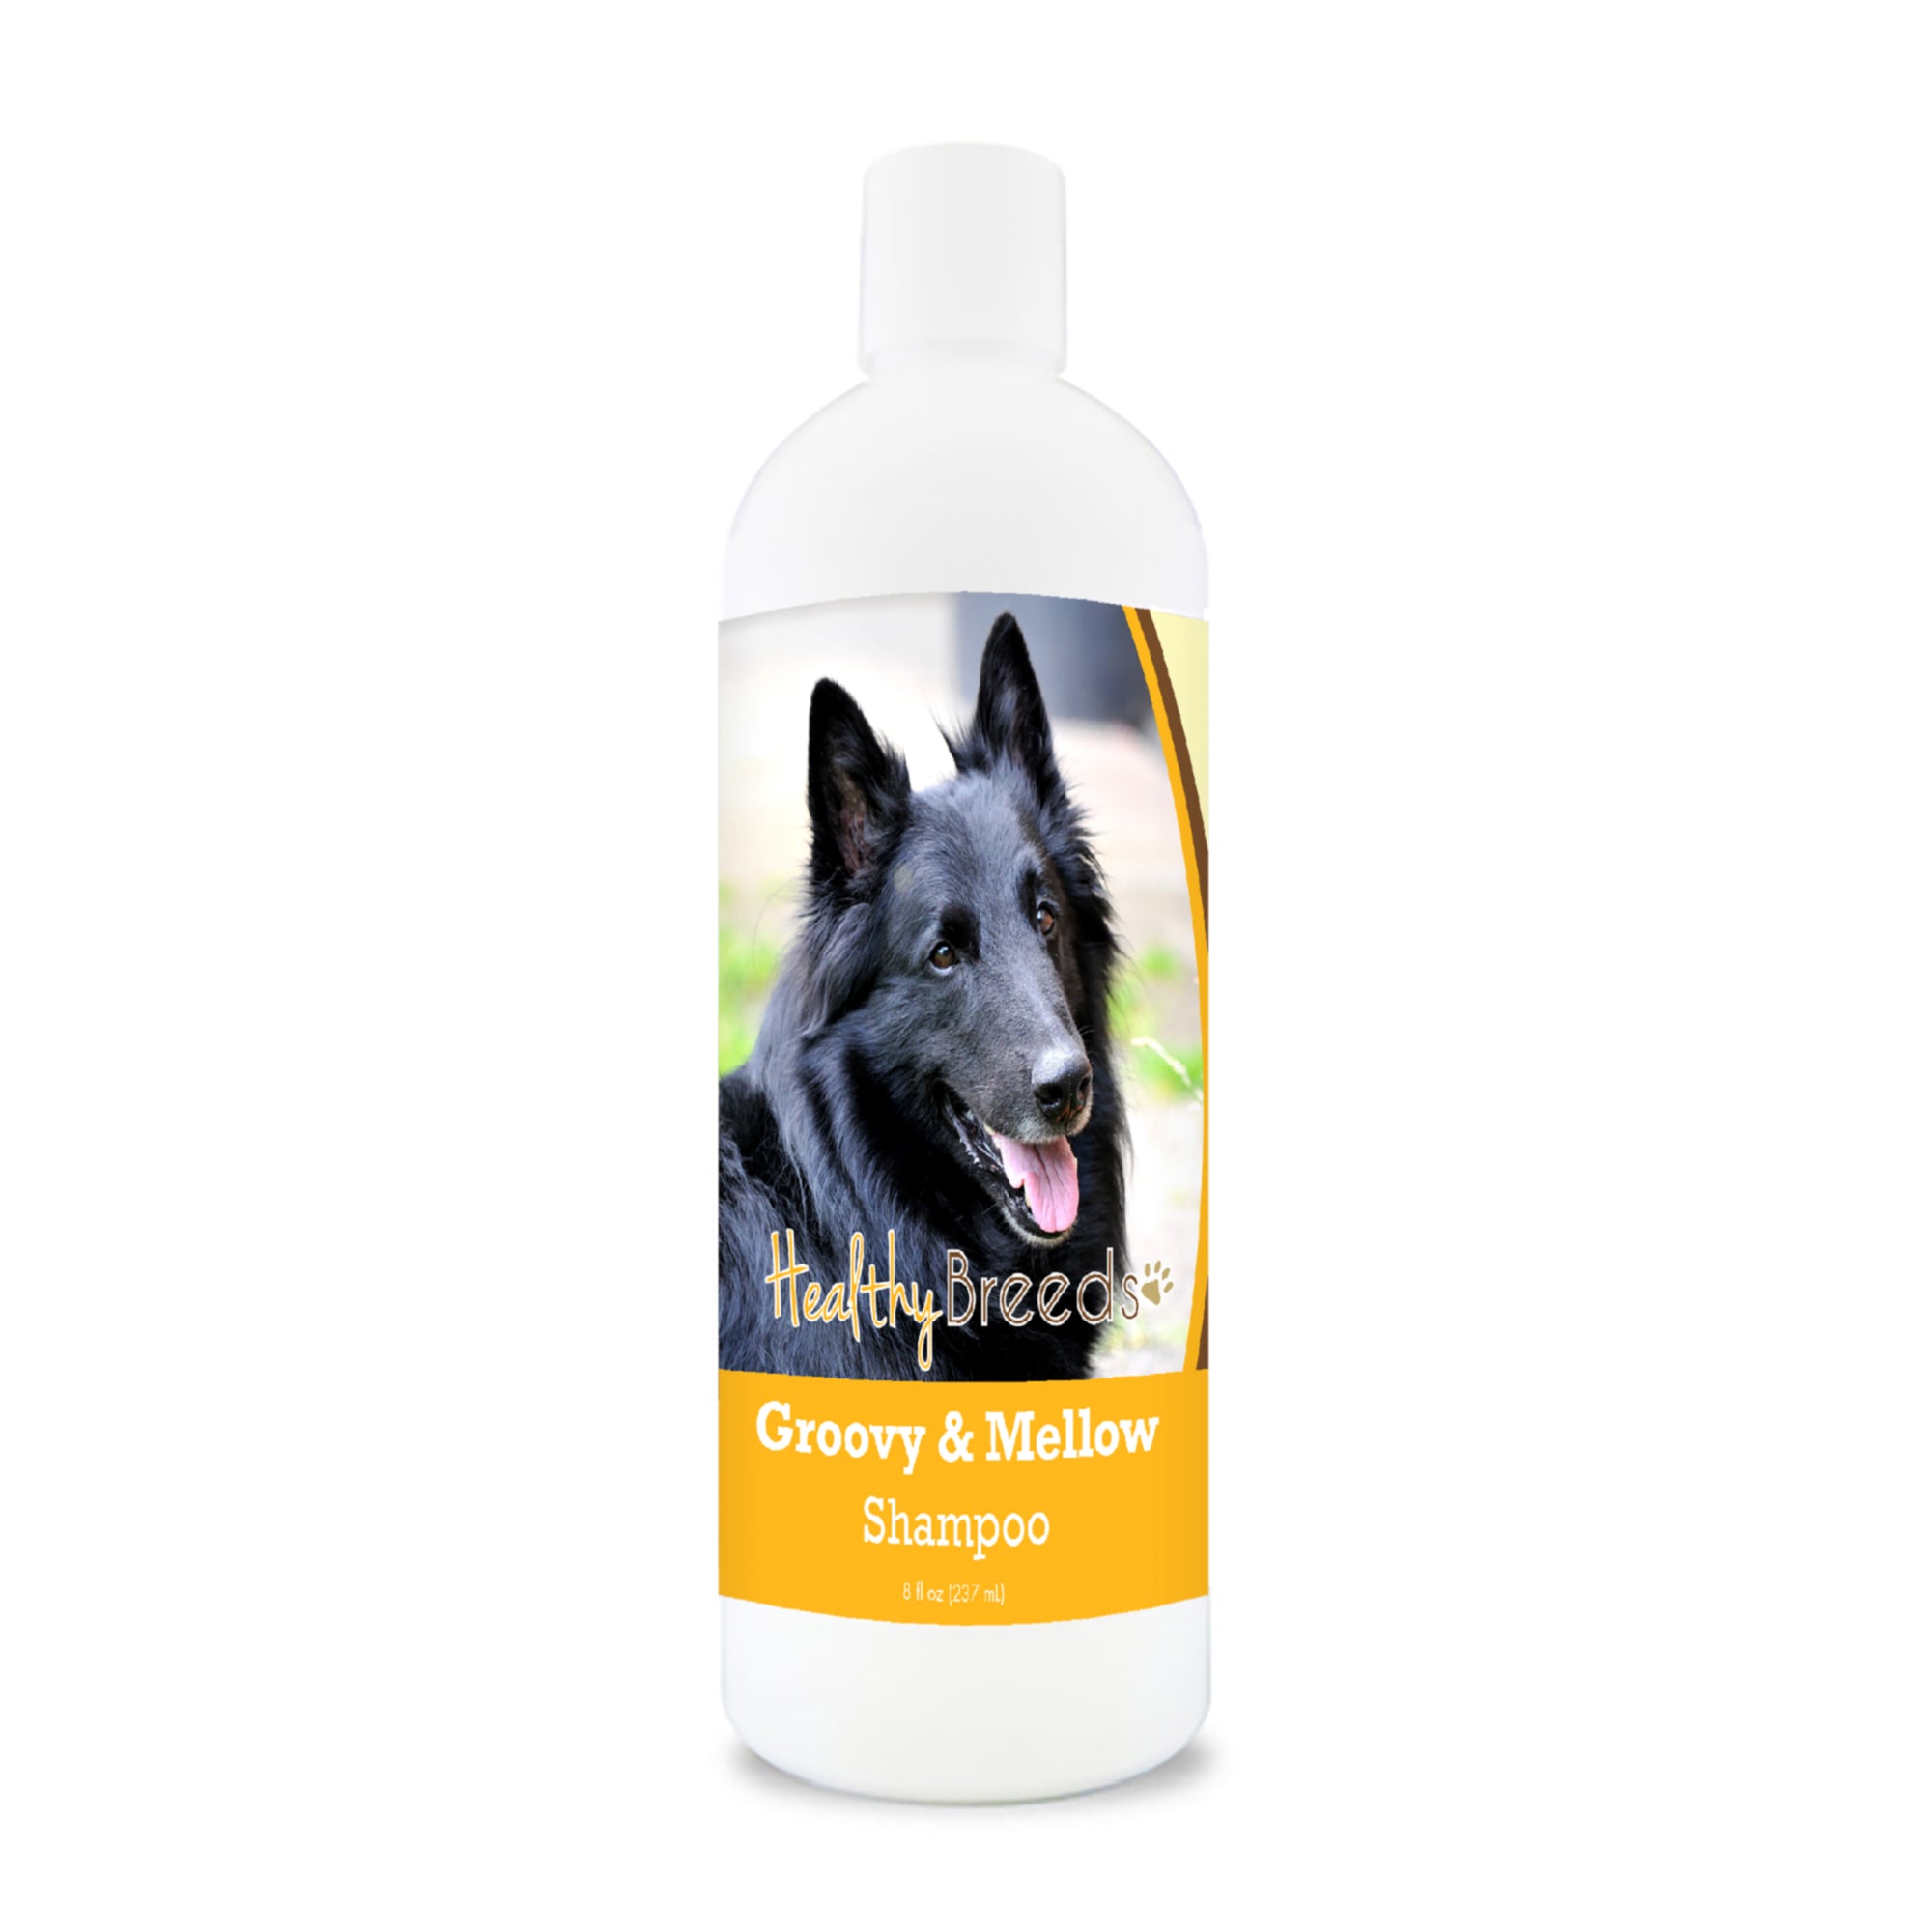 Belgian Sheepdog Groovy & Mellow Shampoo 8 oz